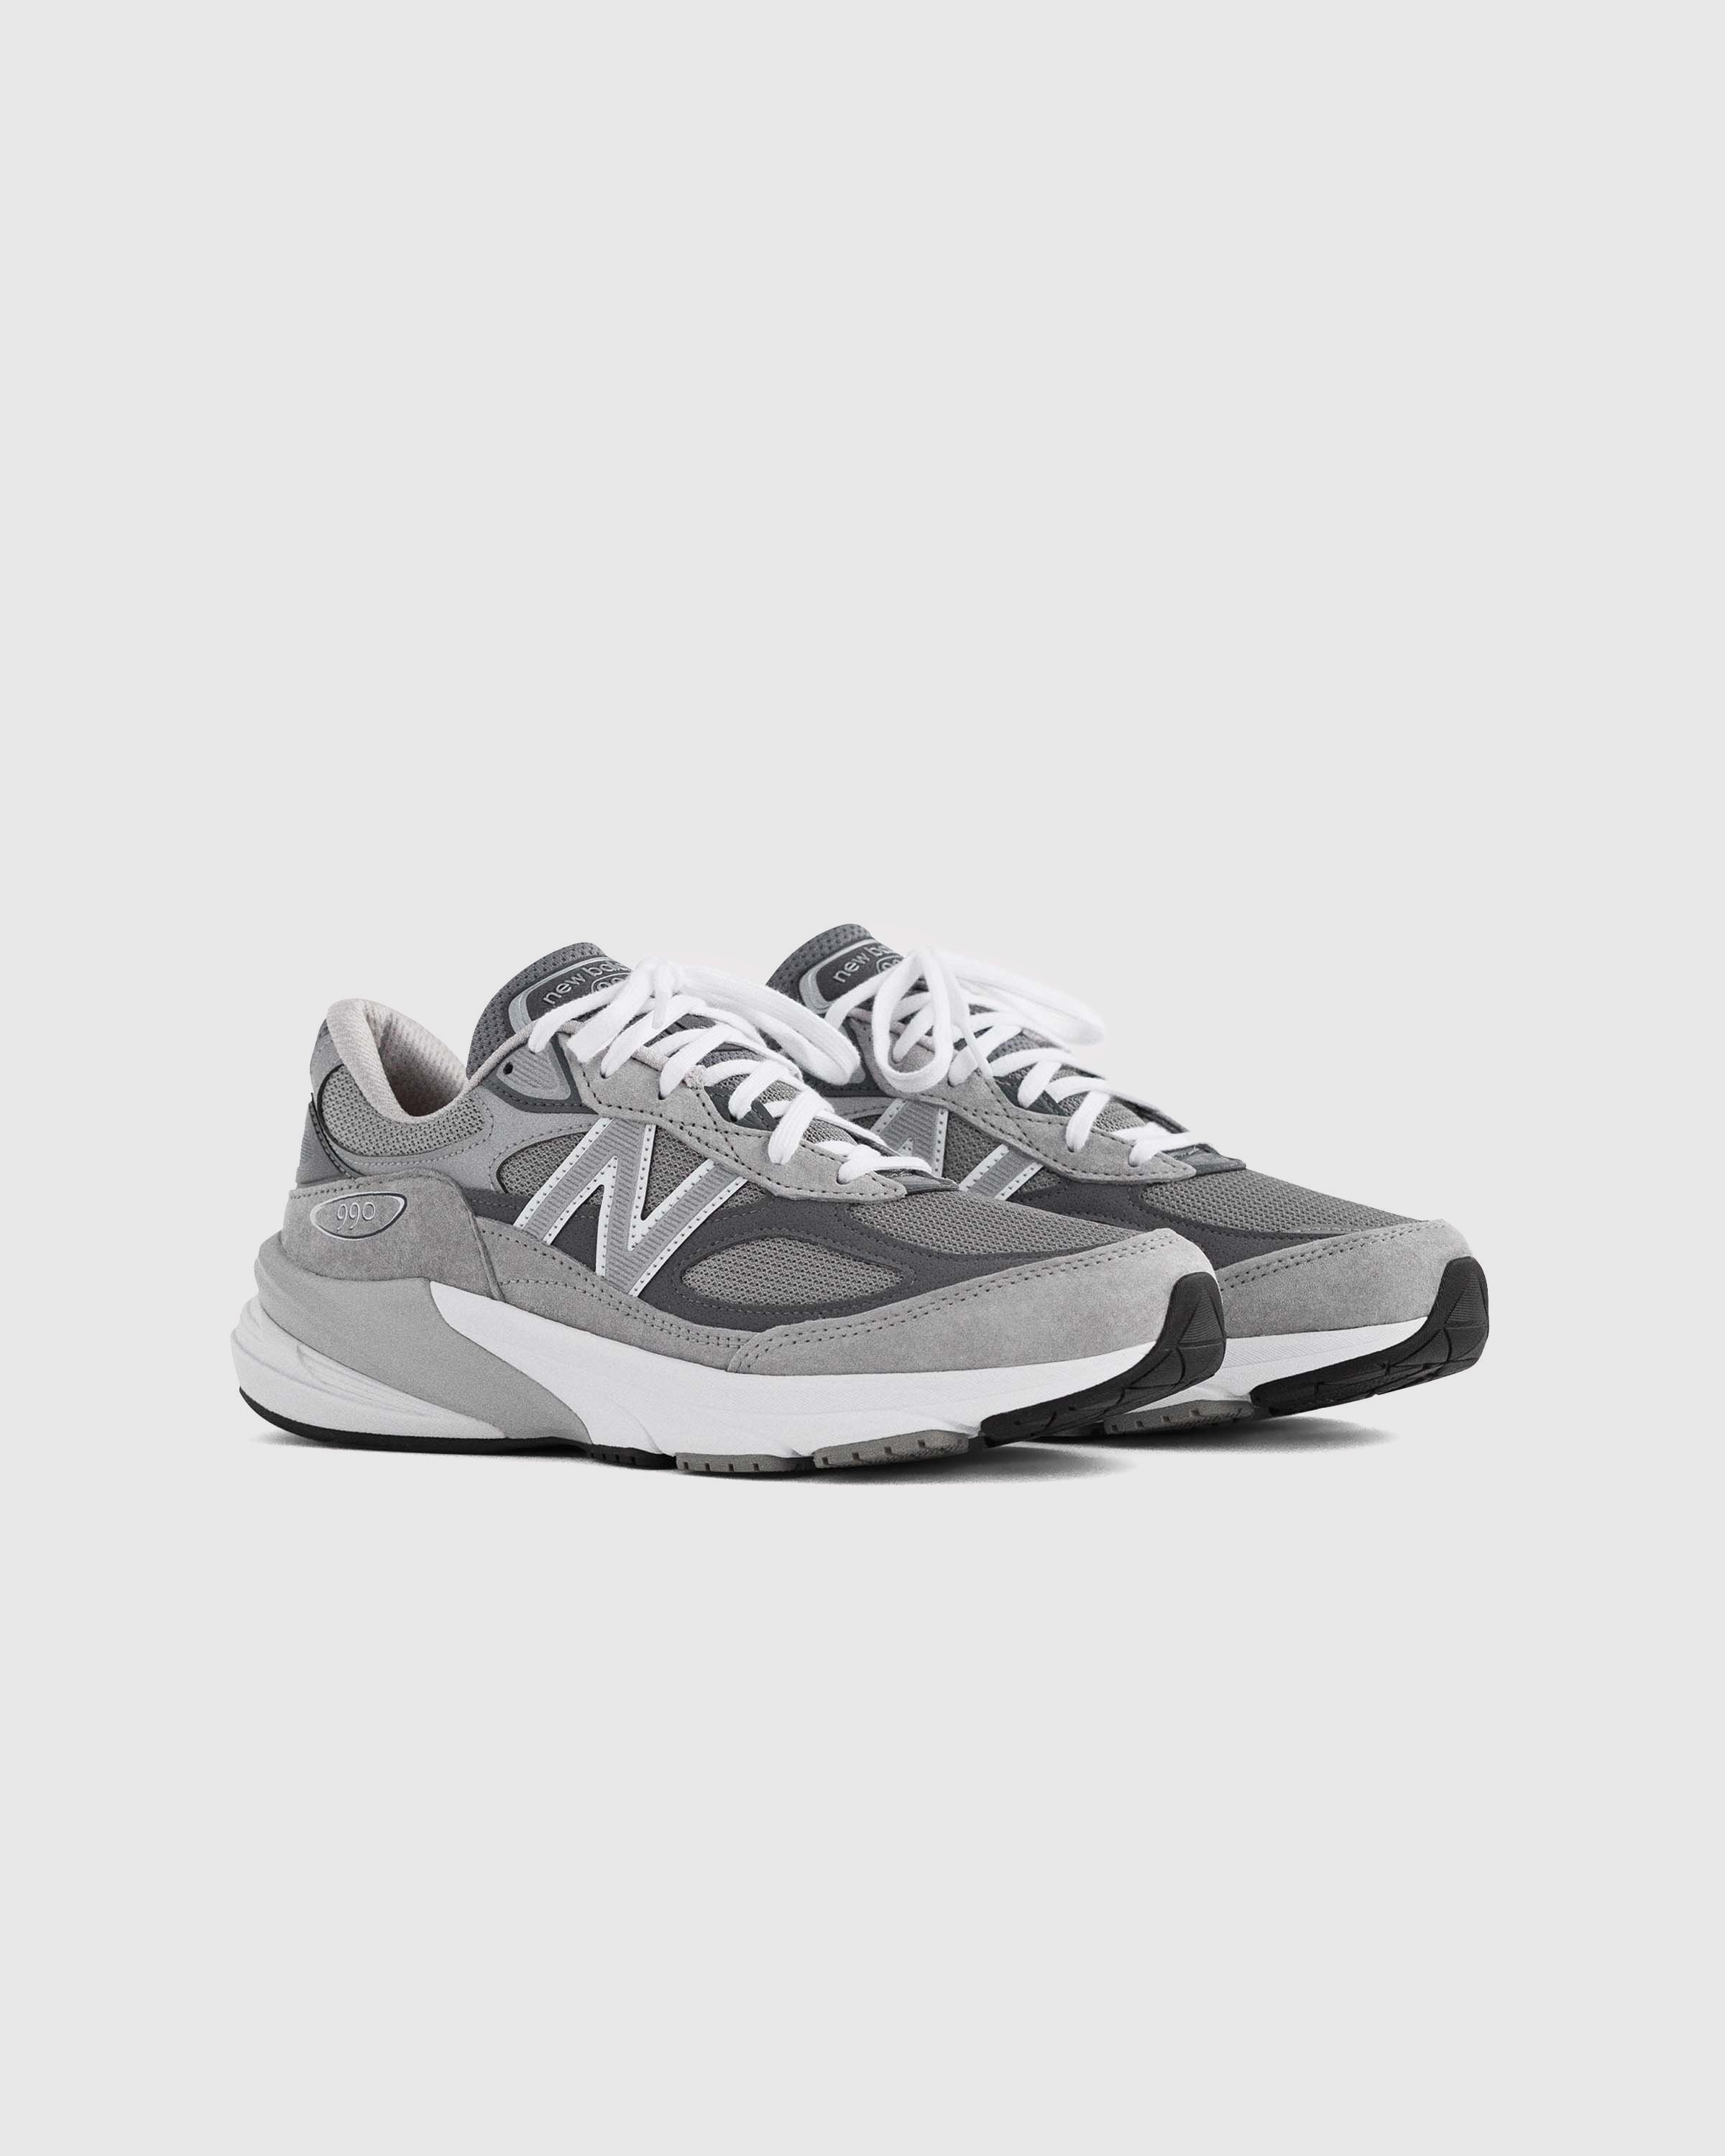 New Balance – M990v6 Cool Gray  - Sneakers - Grey - Image 3